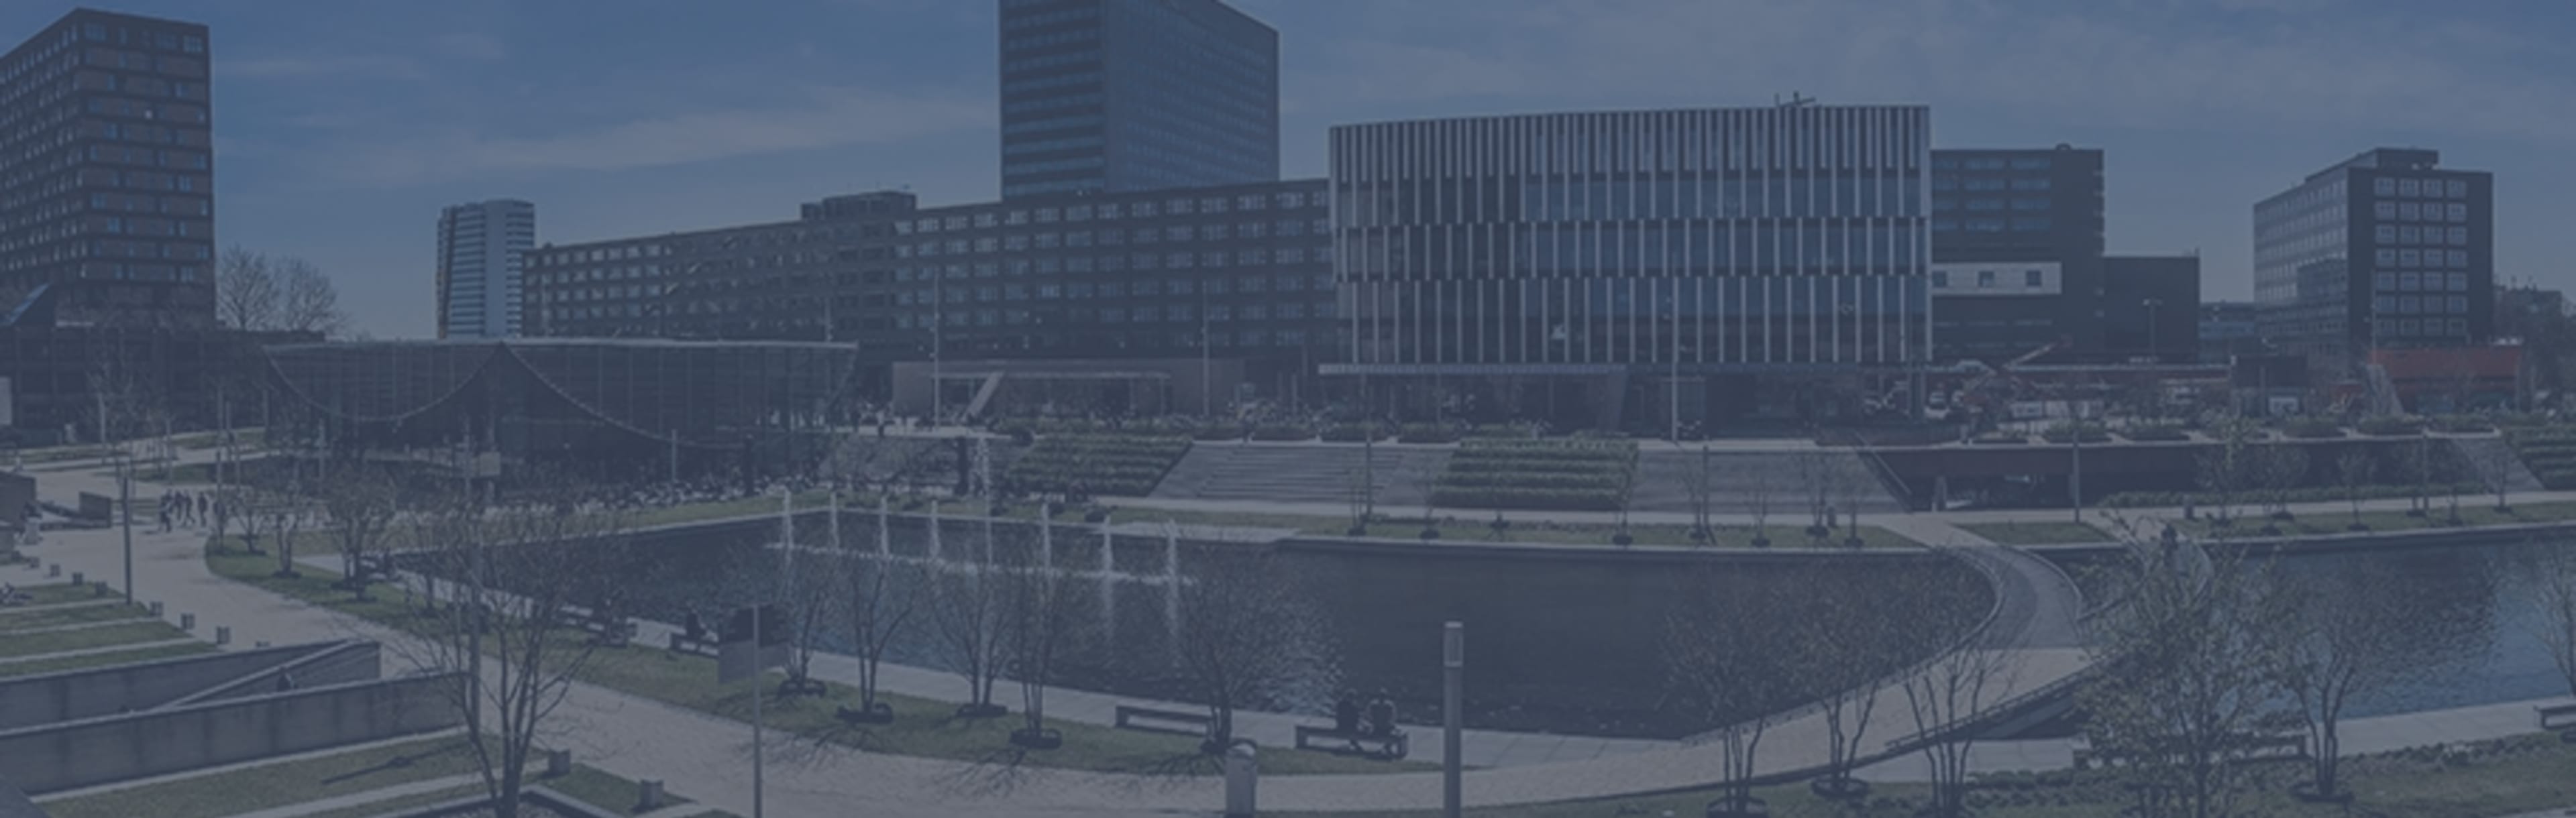 Rotterdam School of Management | Erasmus University